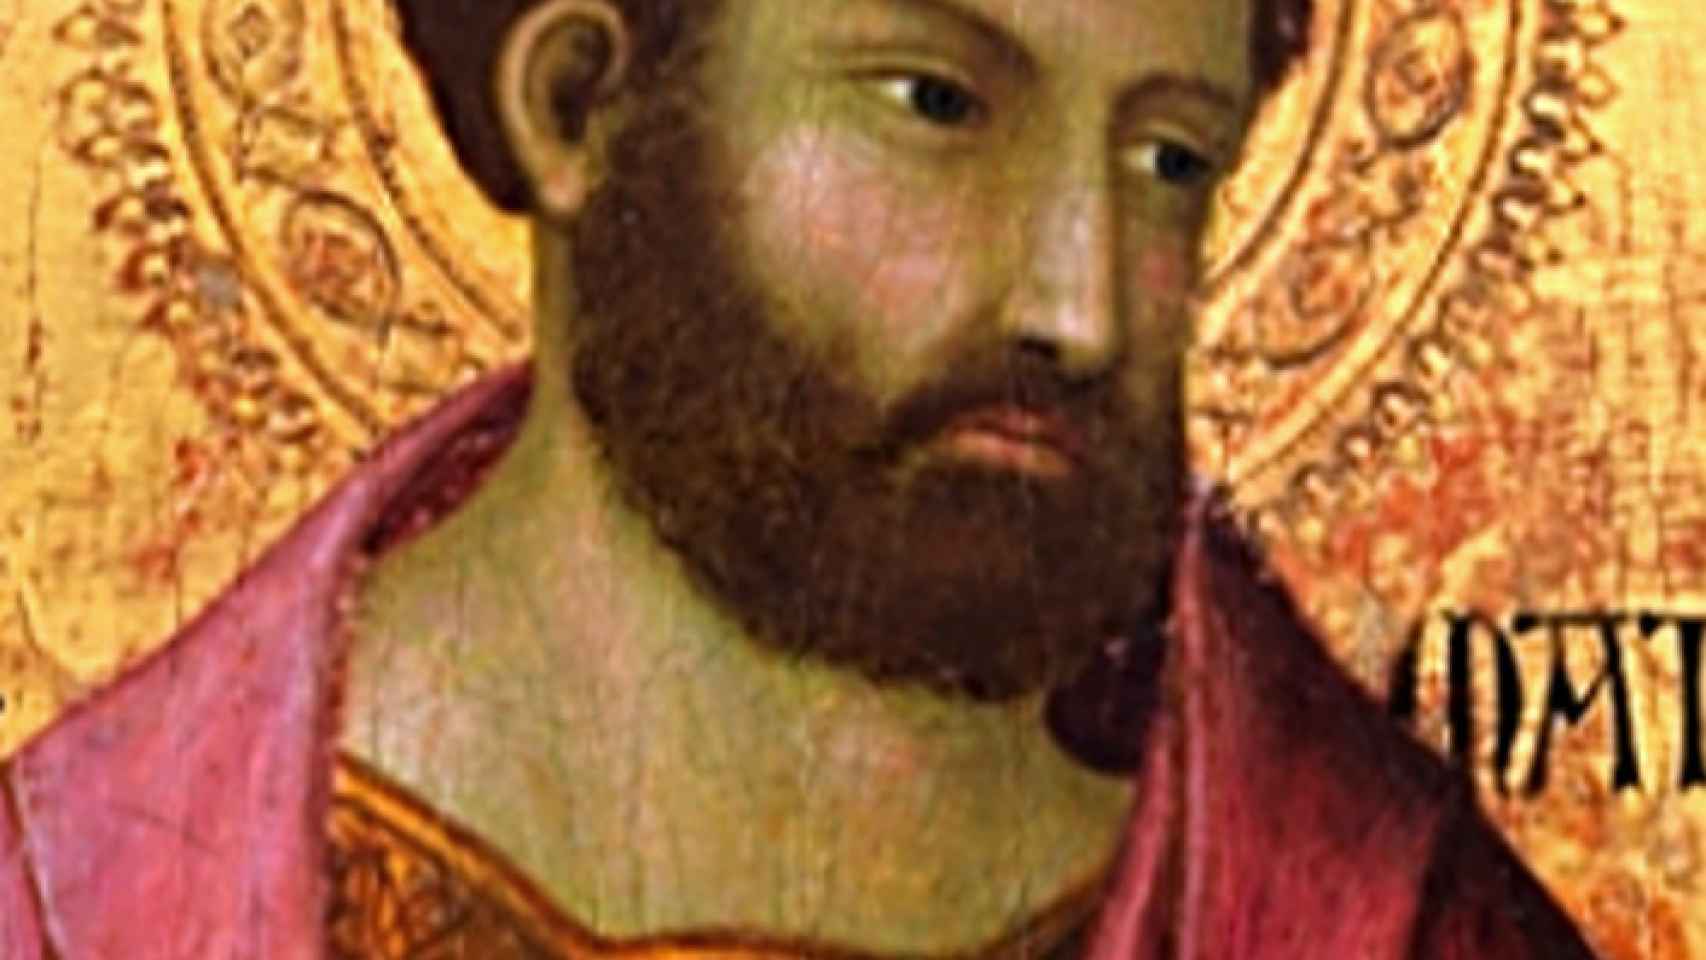 San Matías Apóstol.